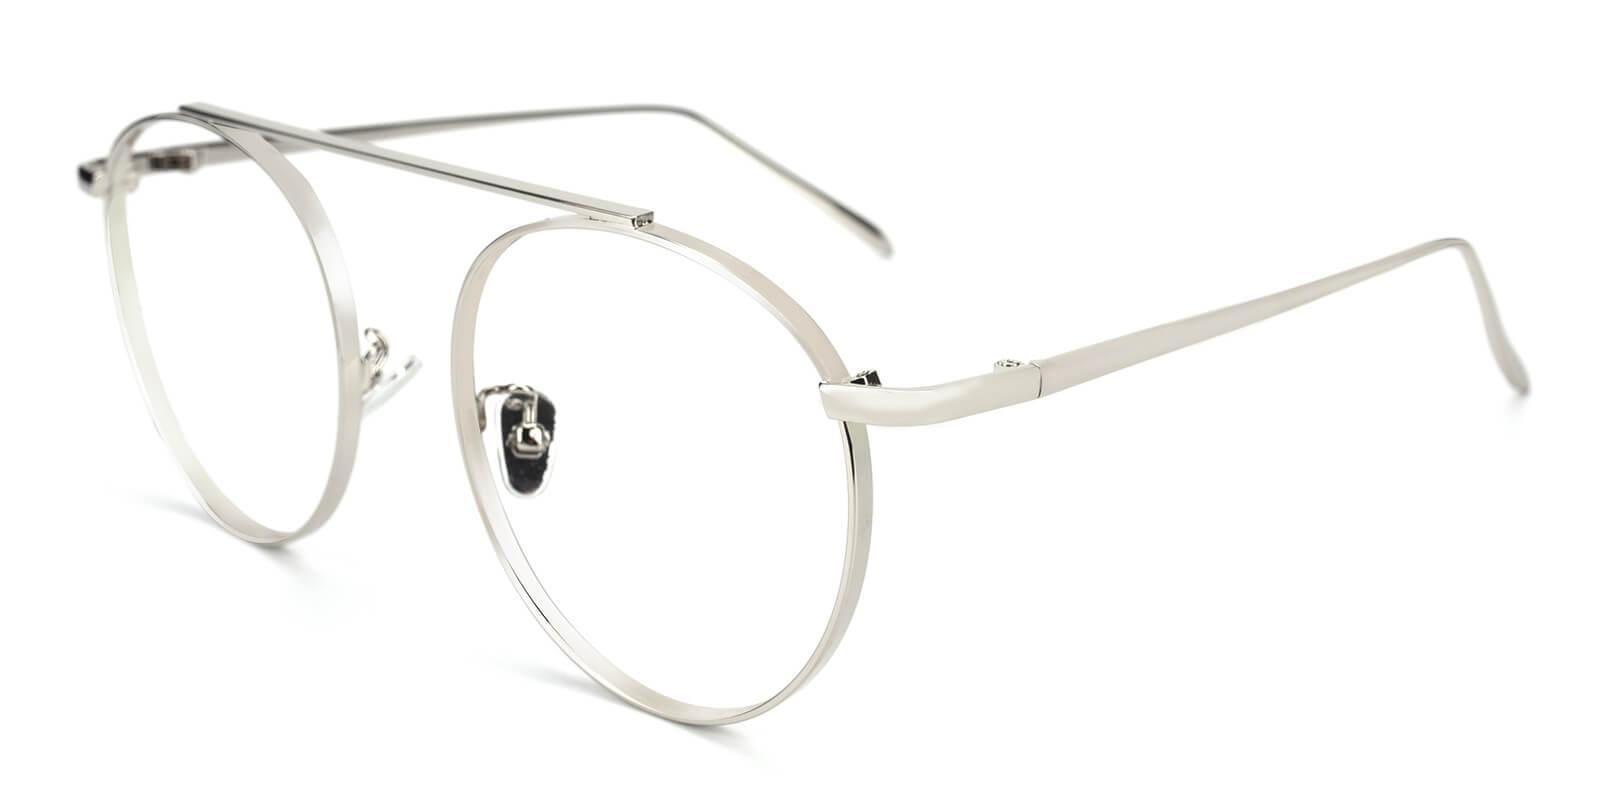 felic Silver Metal Eyeglasses , NosePads Frames from ABBE Glasses